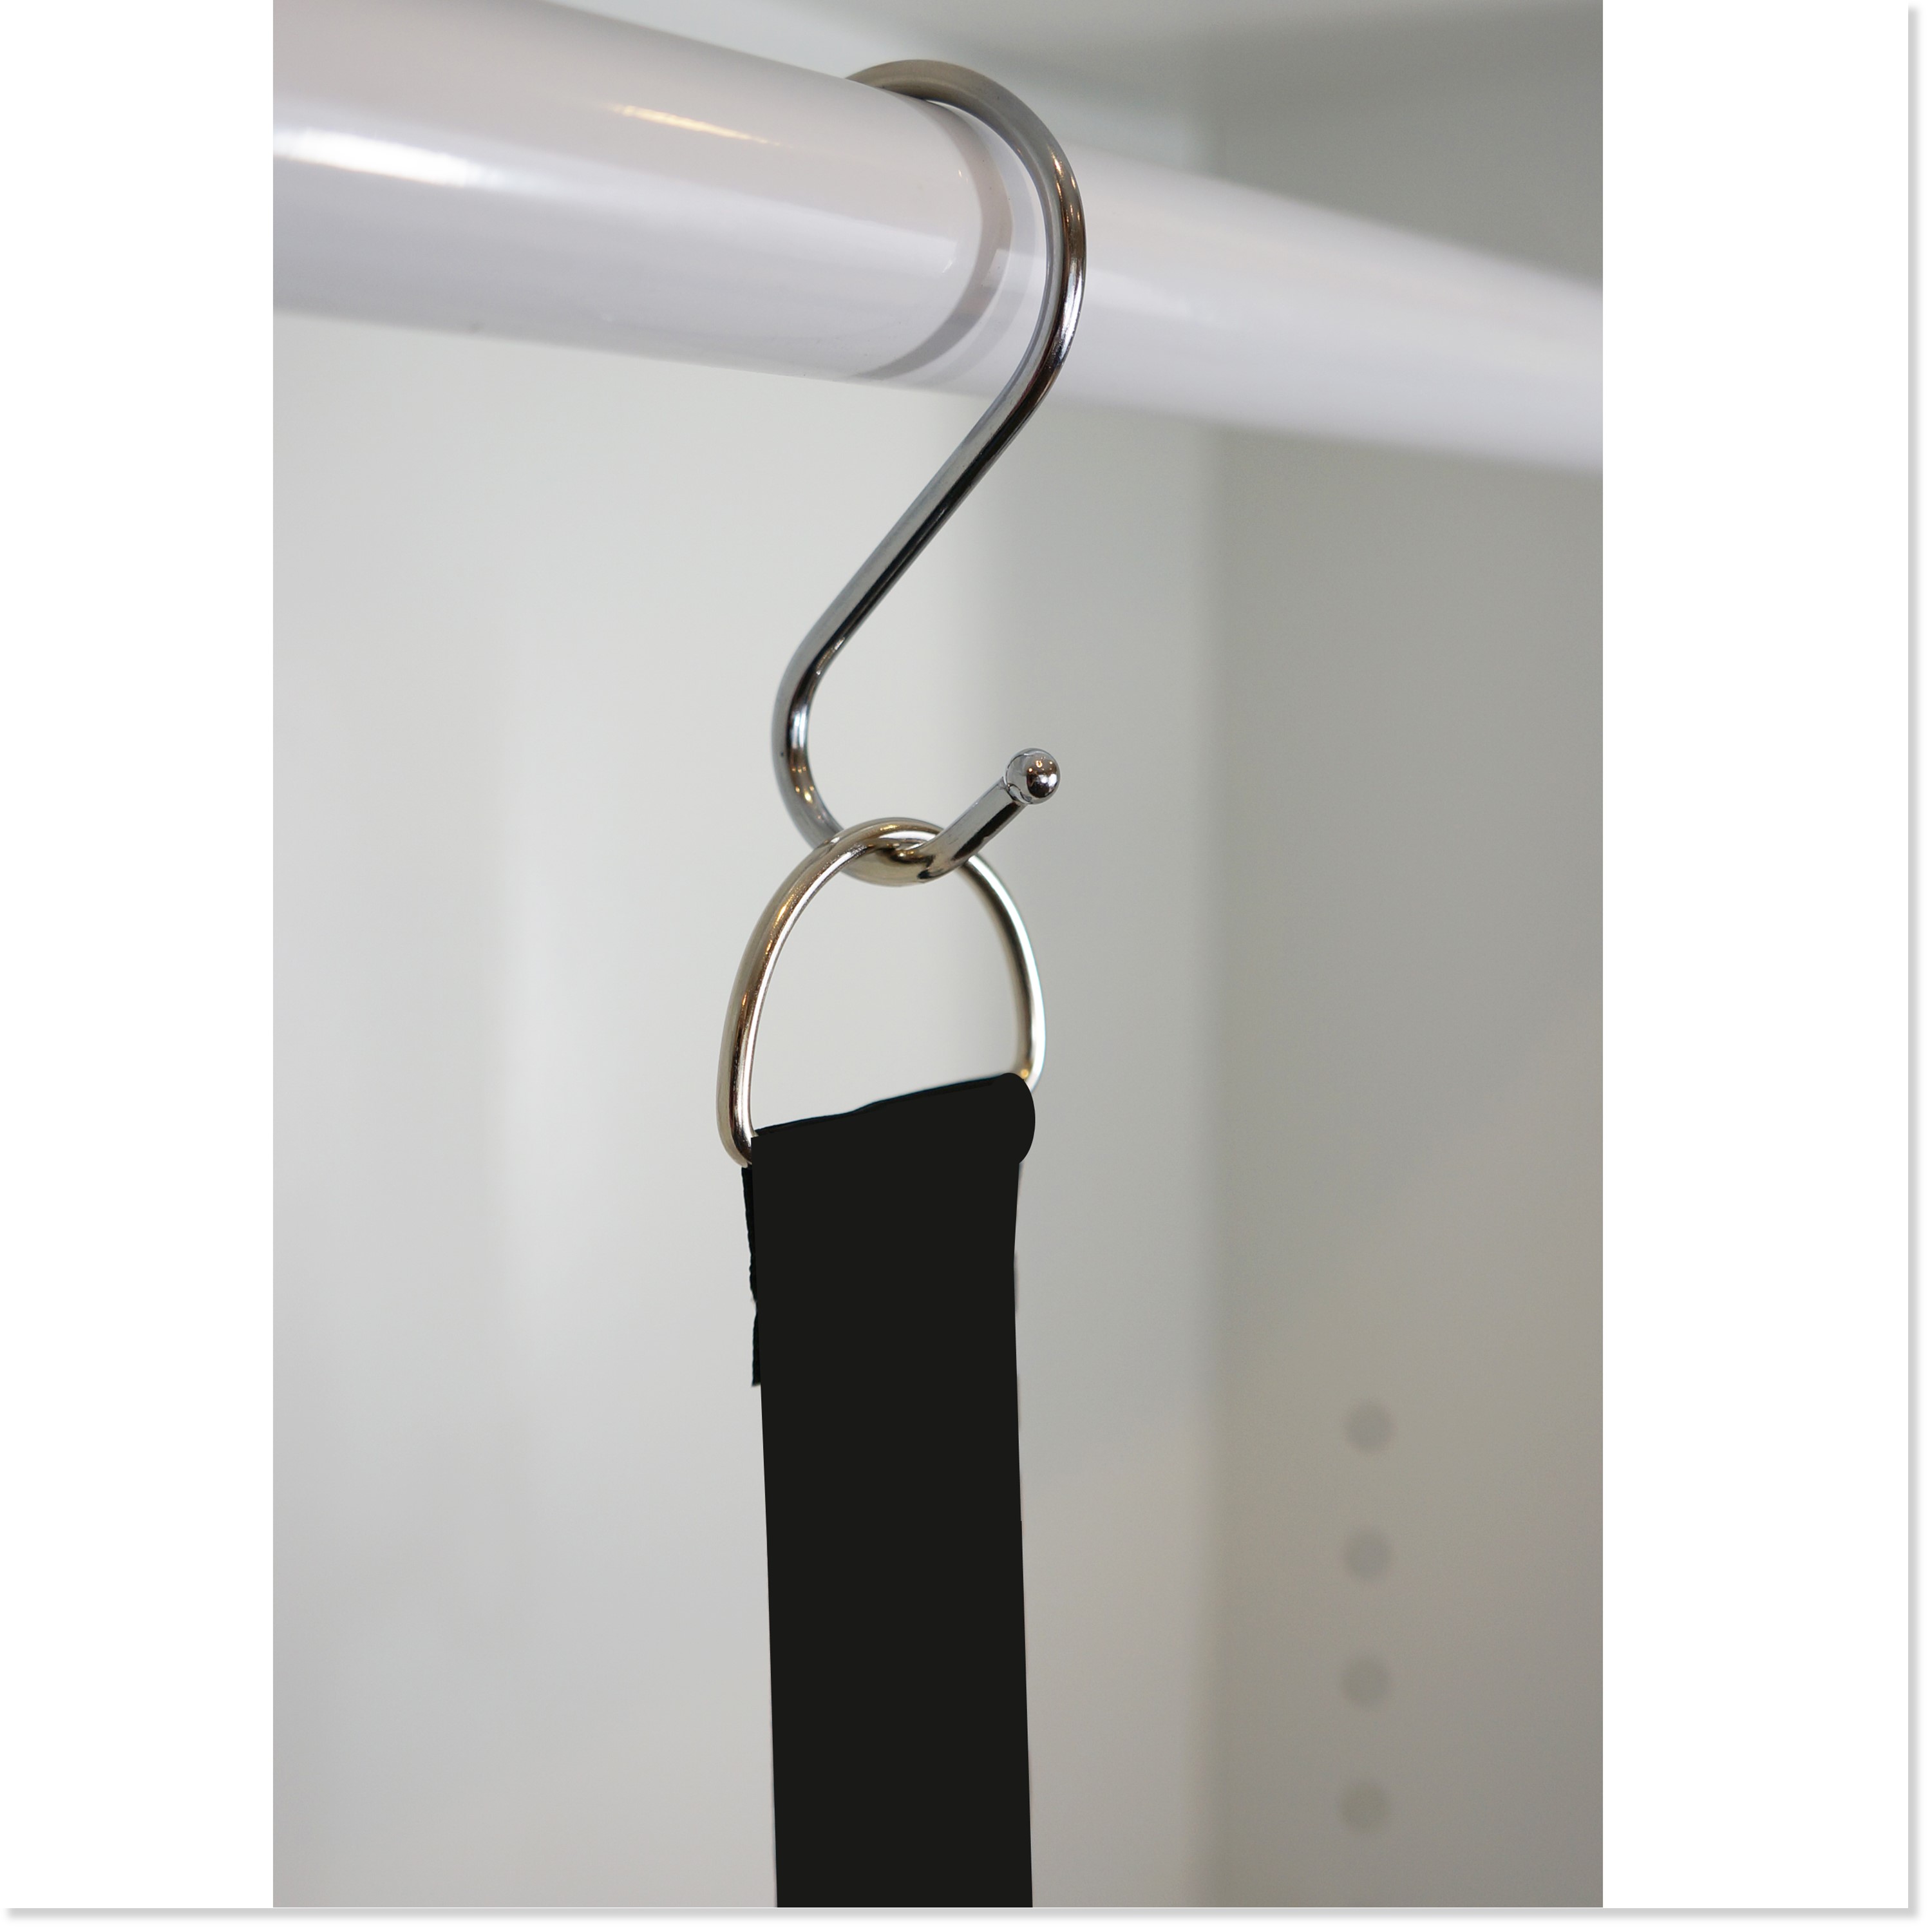 Flip Flop and Sandal Hanger By Boottique - image 5 of 5